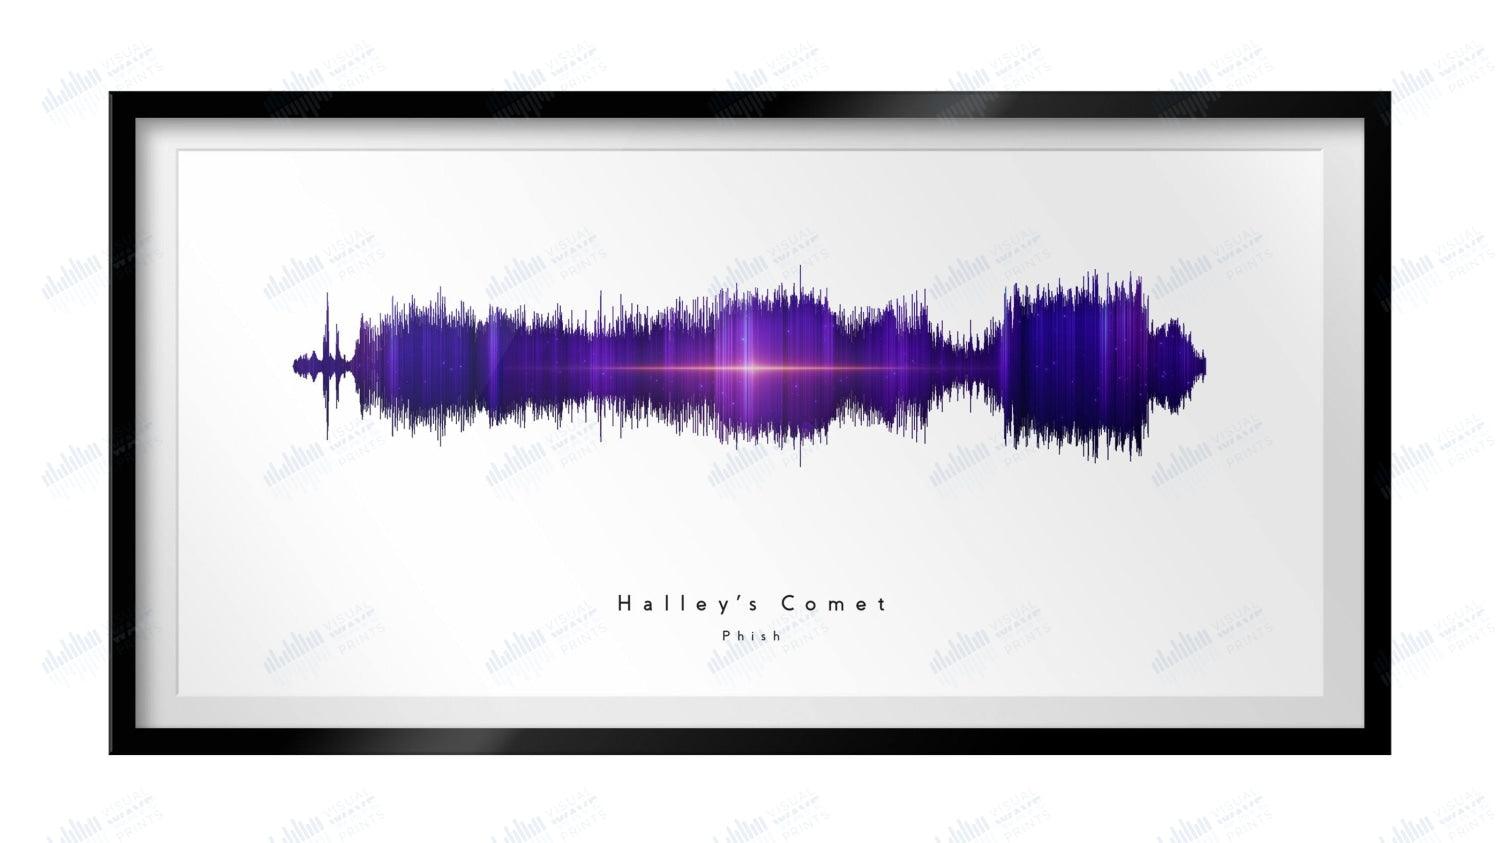 Halleys Comet by Phish - Visual Wave Prints